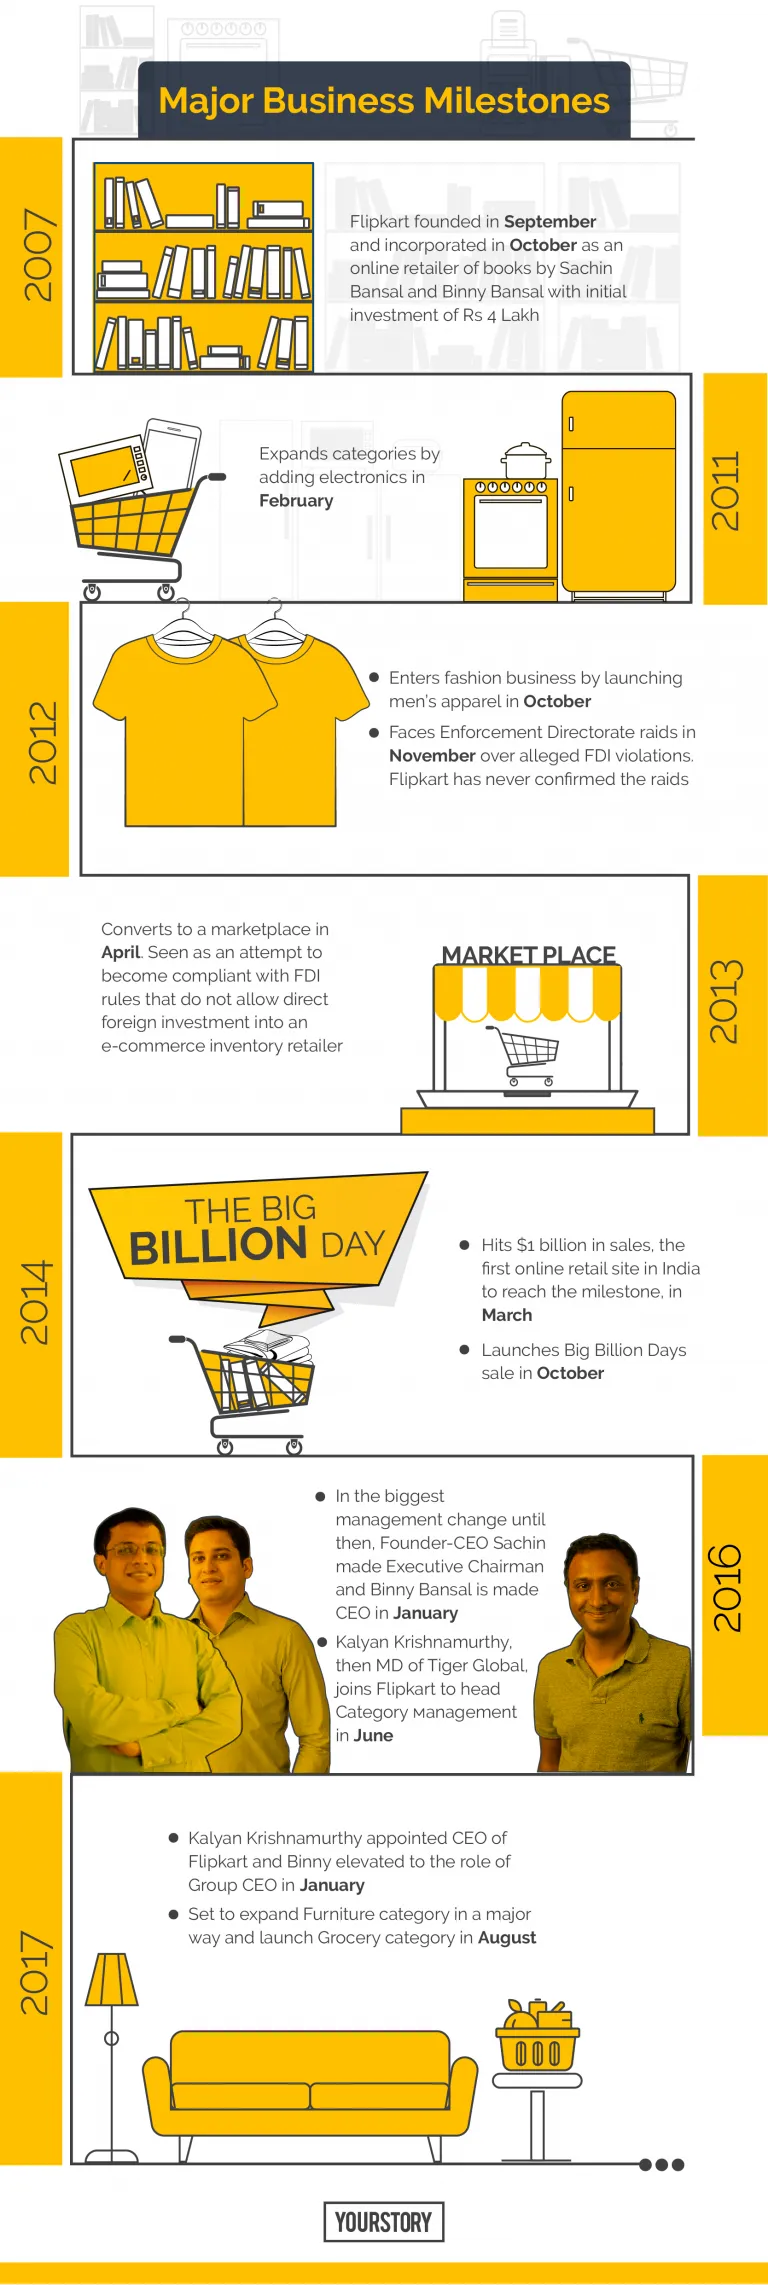 Flipkart-major-business-milestones